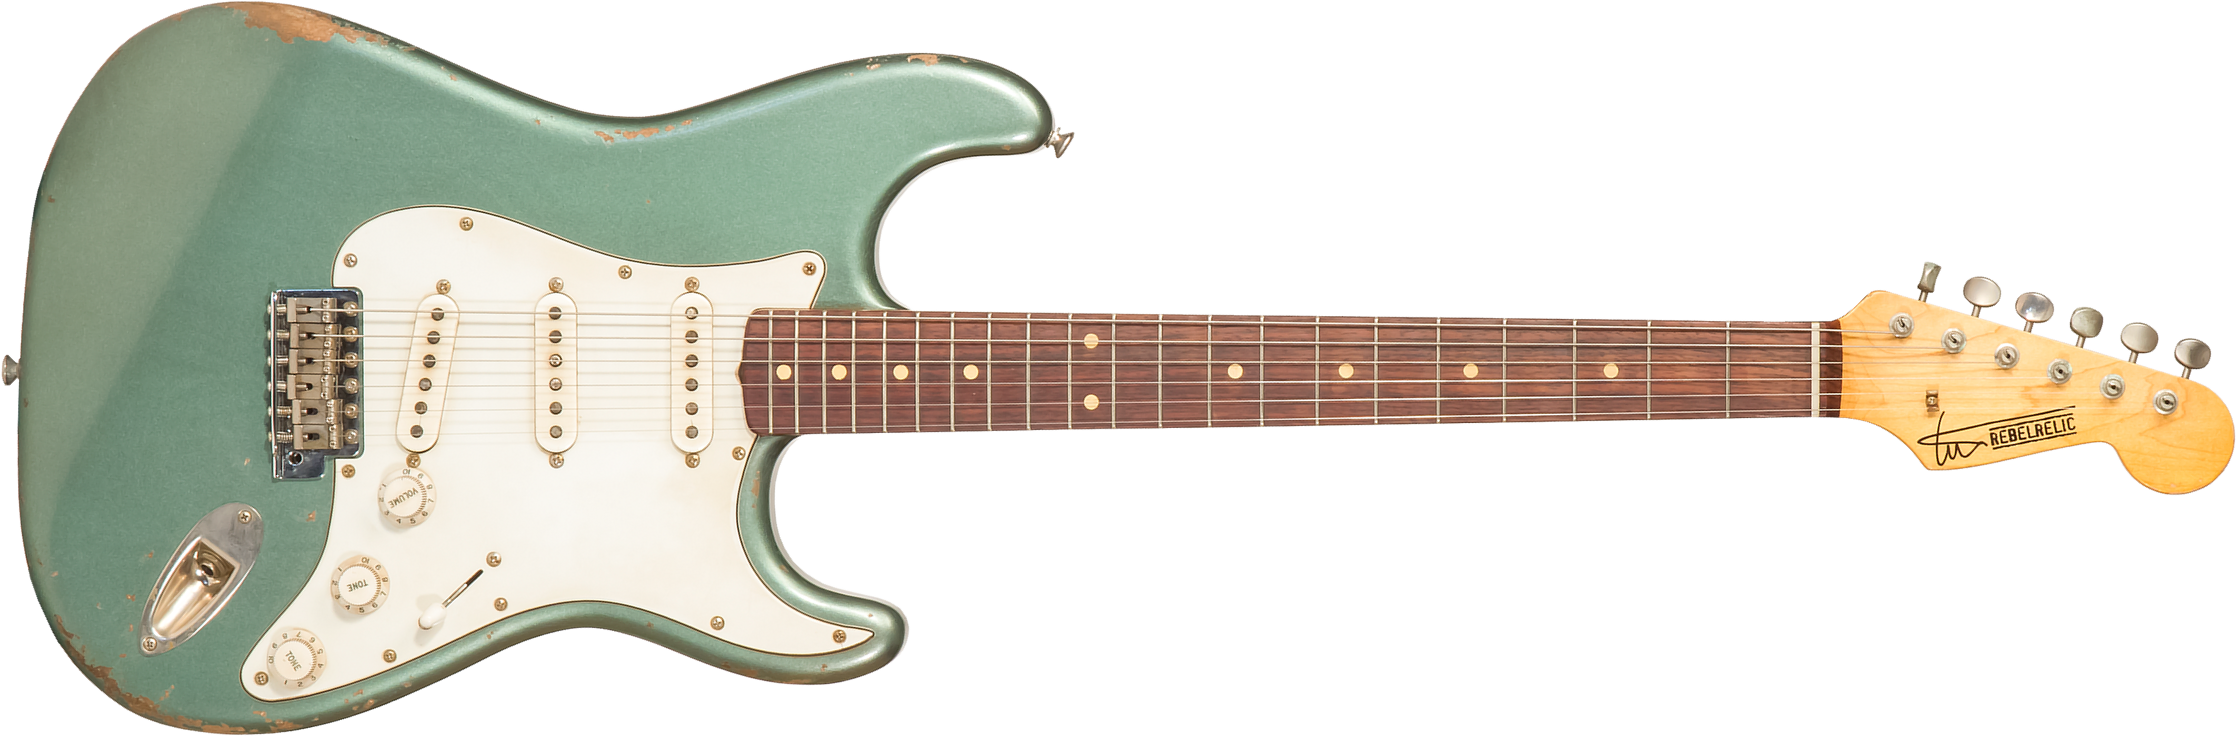 Rebelrelic S-series 62 3s Trem Rw #230203 - Light Aged Sherwood Forest Green - Guitarra eléctrica con forma de str. - Main picture